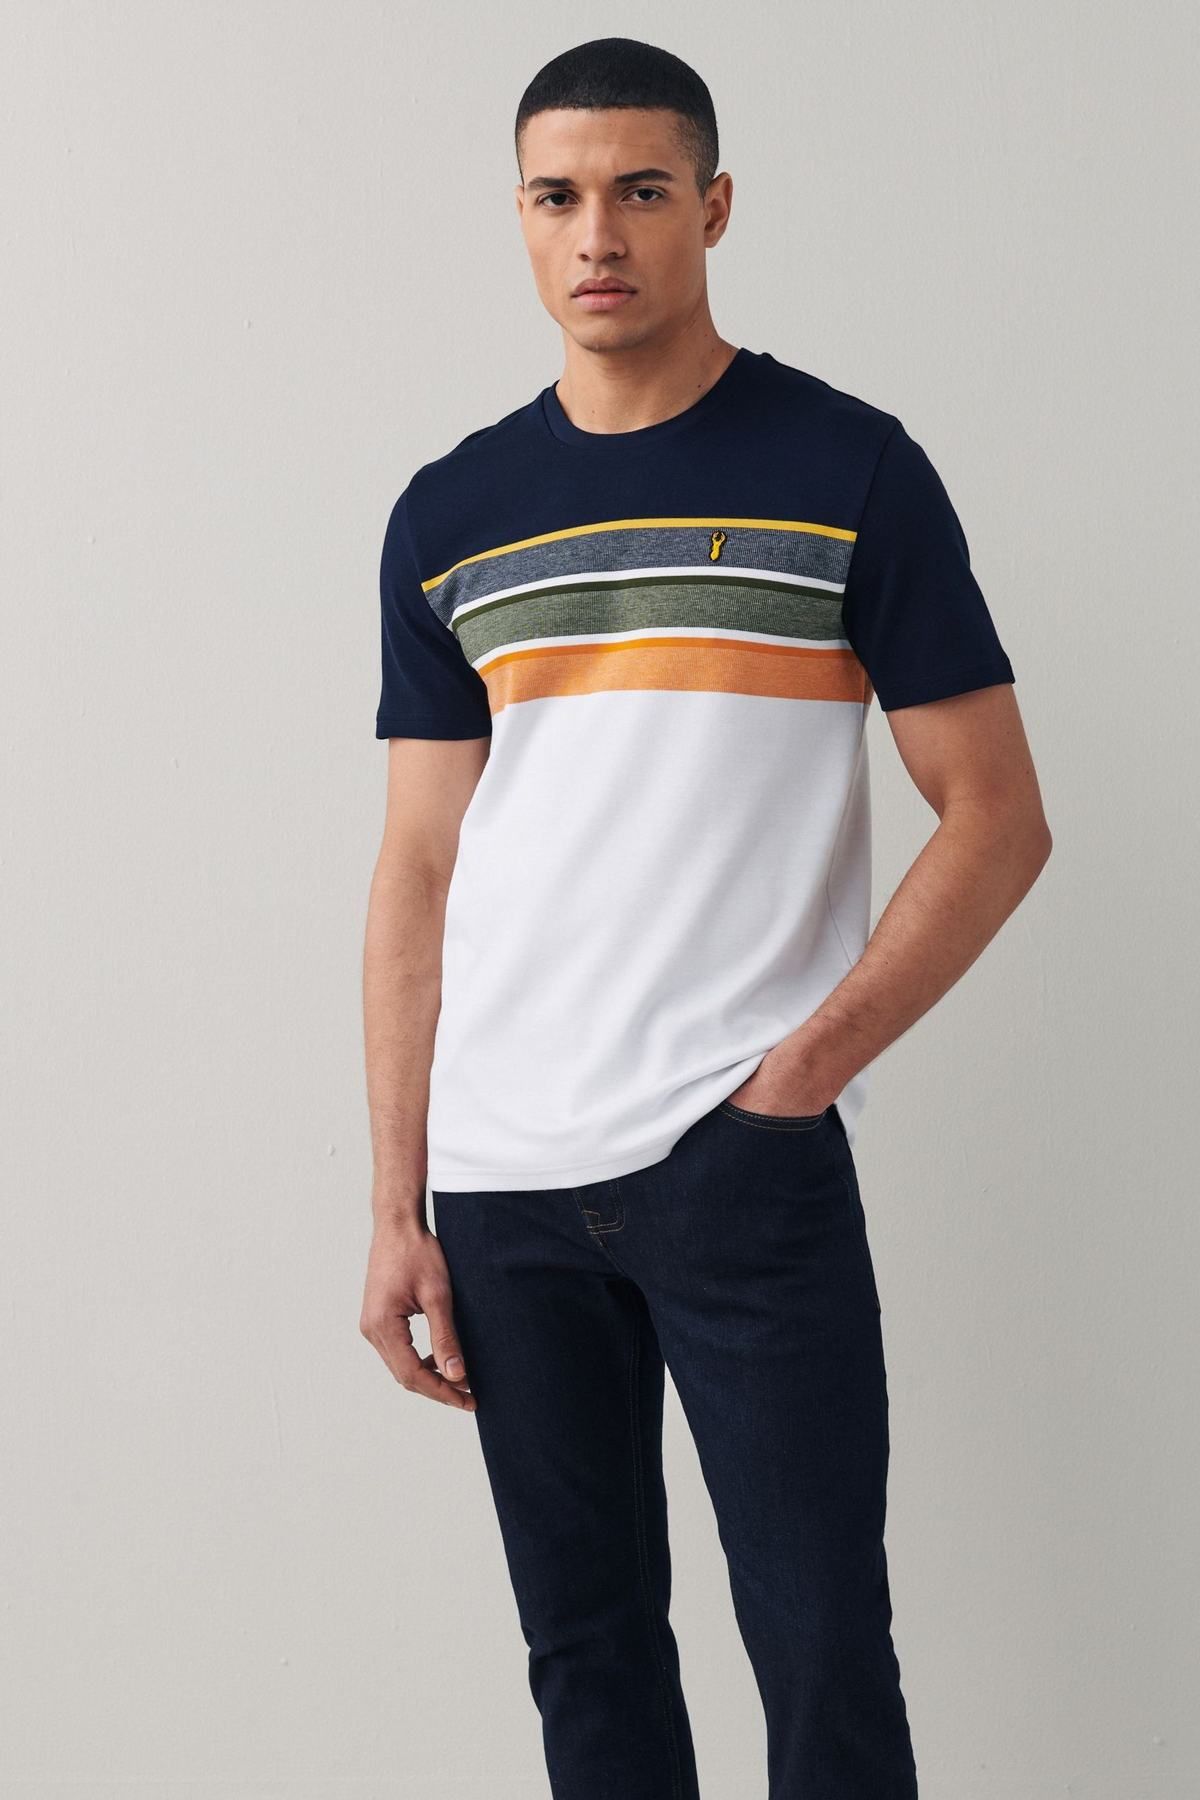 NEXT Soft Touch T-Shirt Navy/White Men